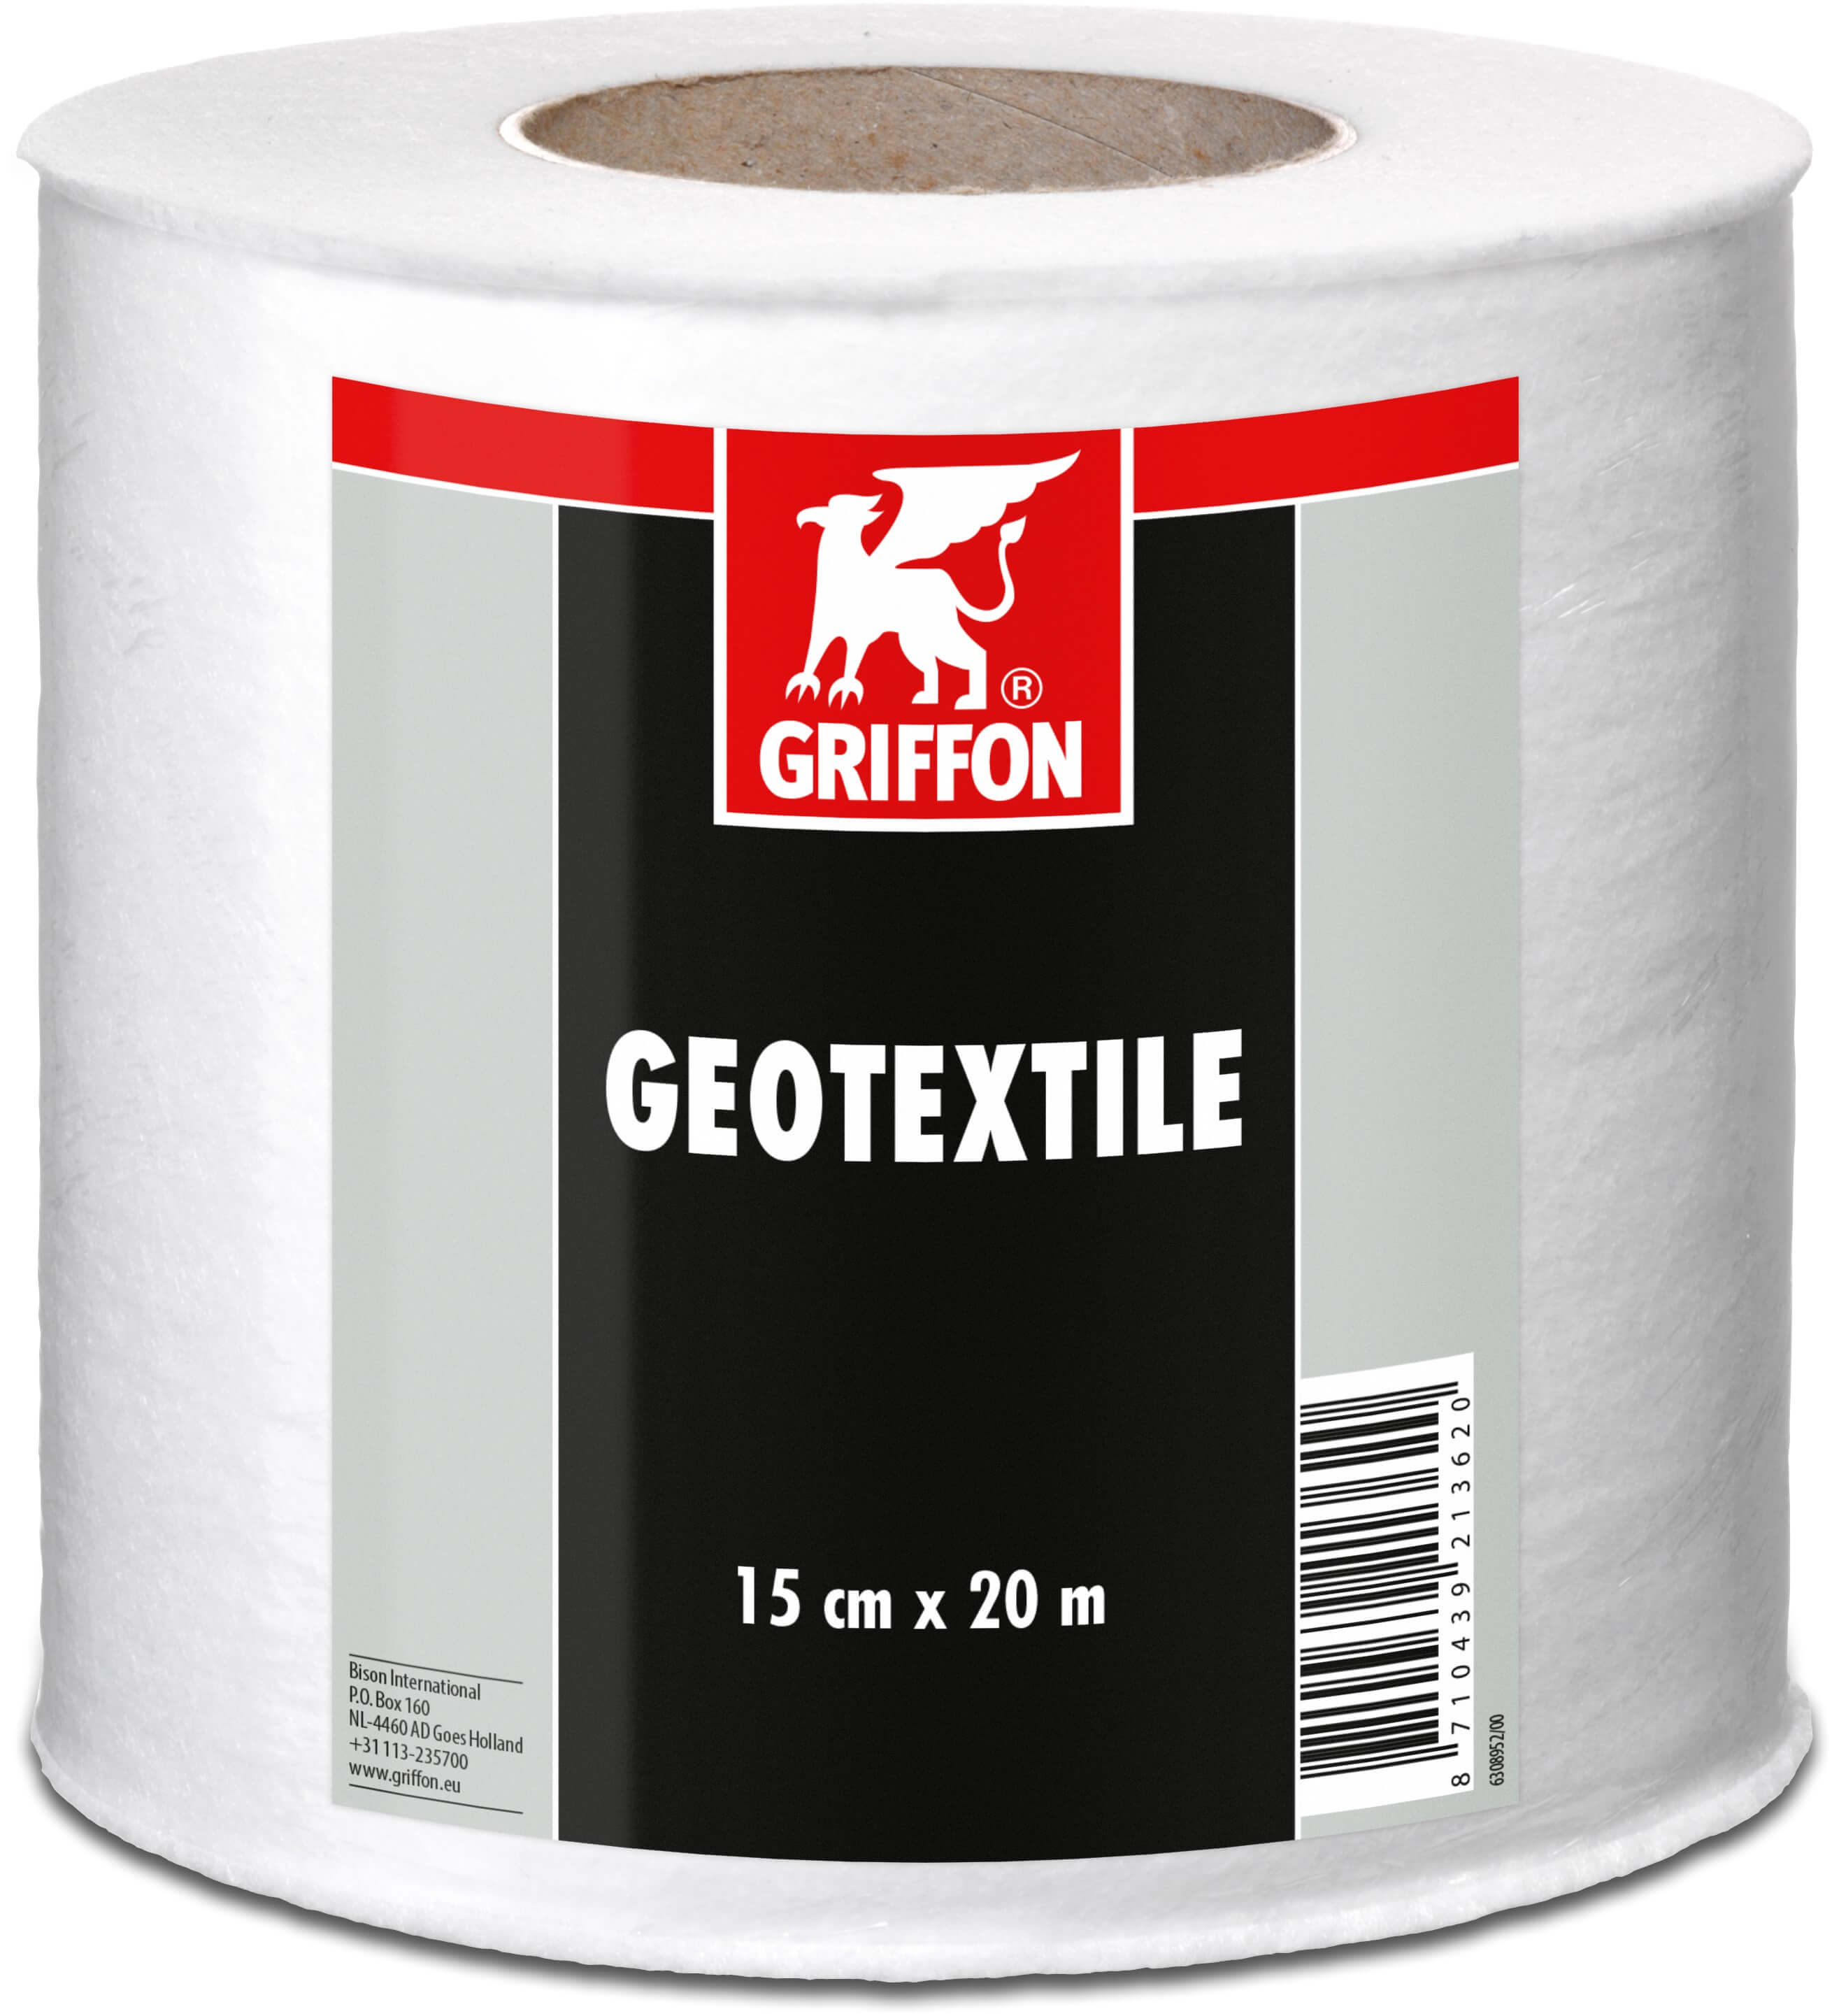 Griffon Geotextiel 20m type Geotextile 150 mm